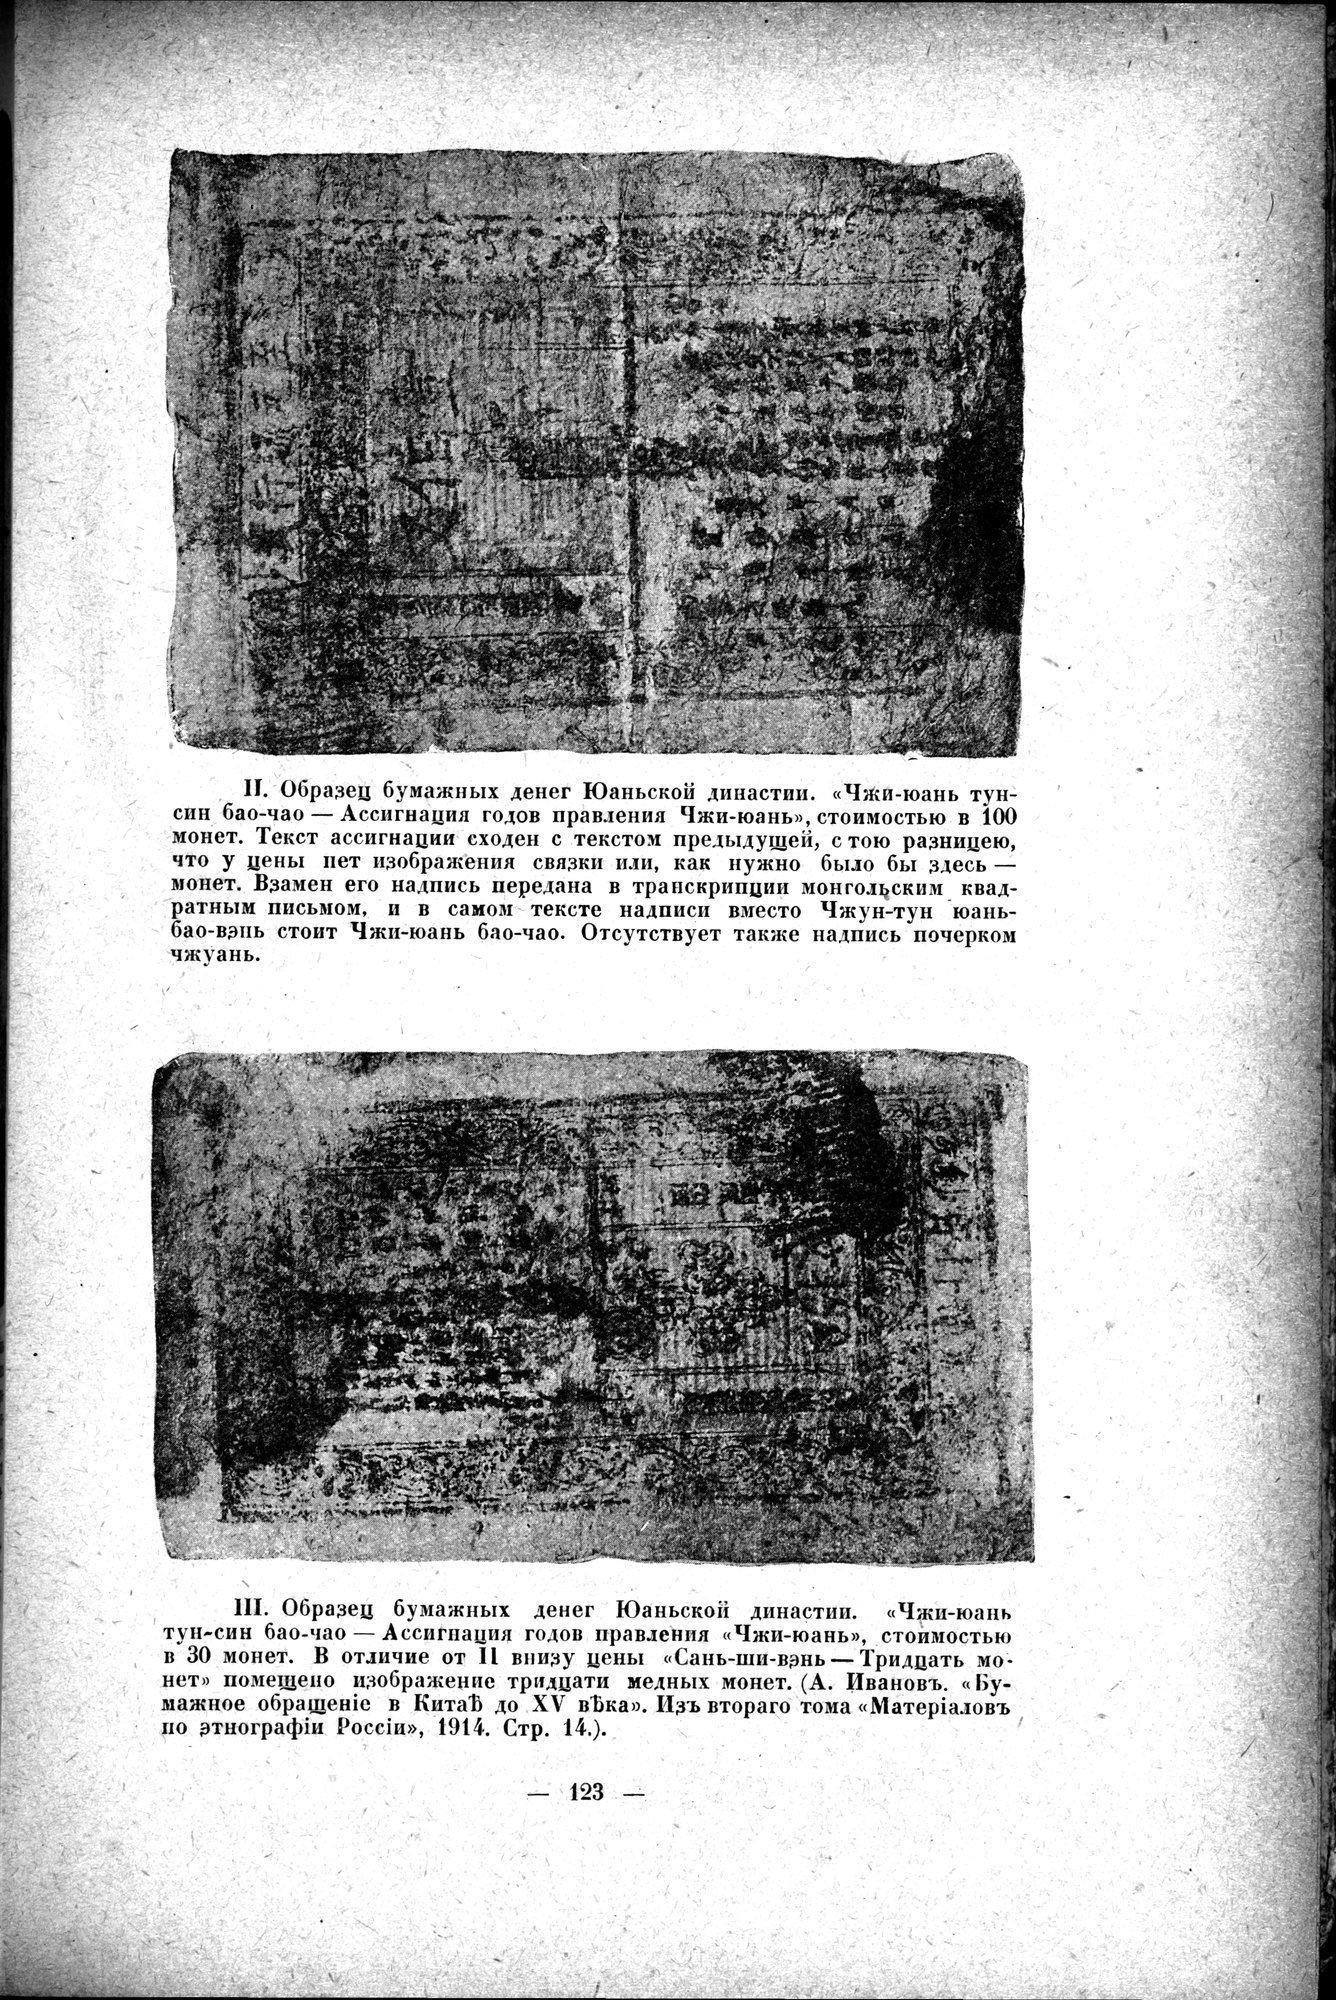 Mongoliya i Amdo i mertby gorod Khara-Khoto : vol.1 / Page 149 (Grayscale High Resolution Image)